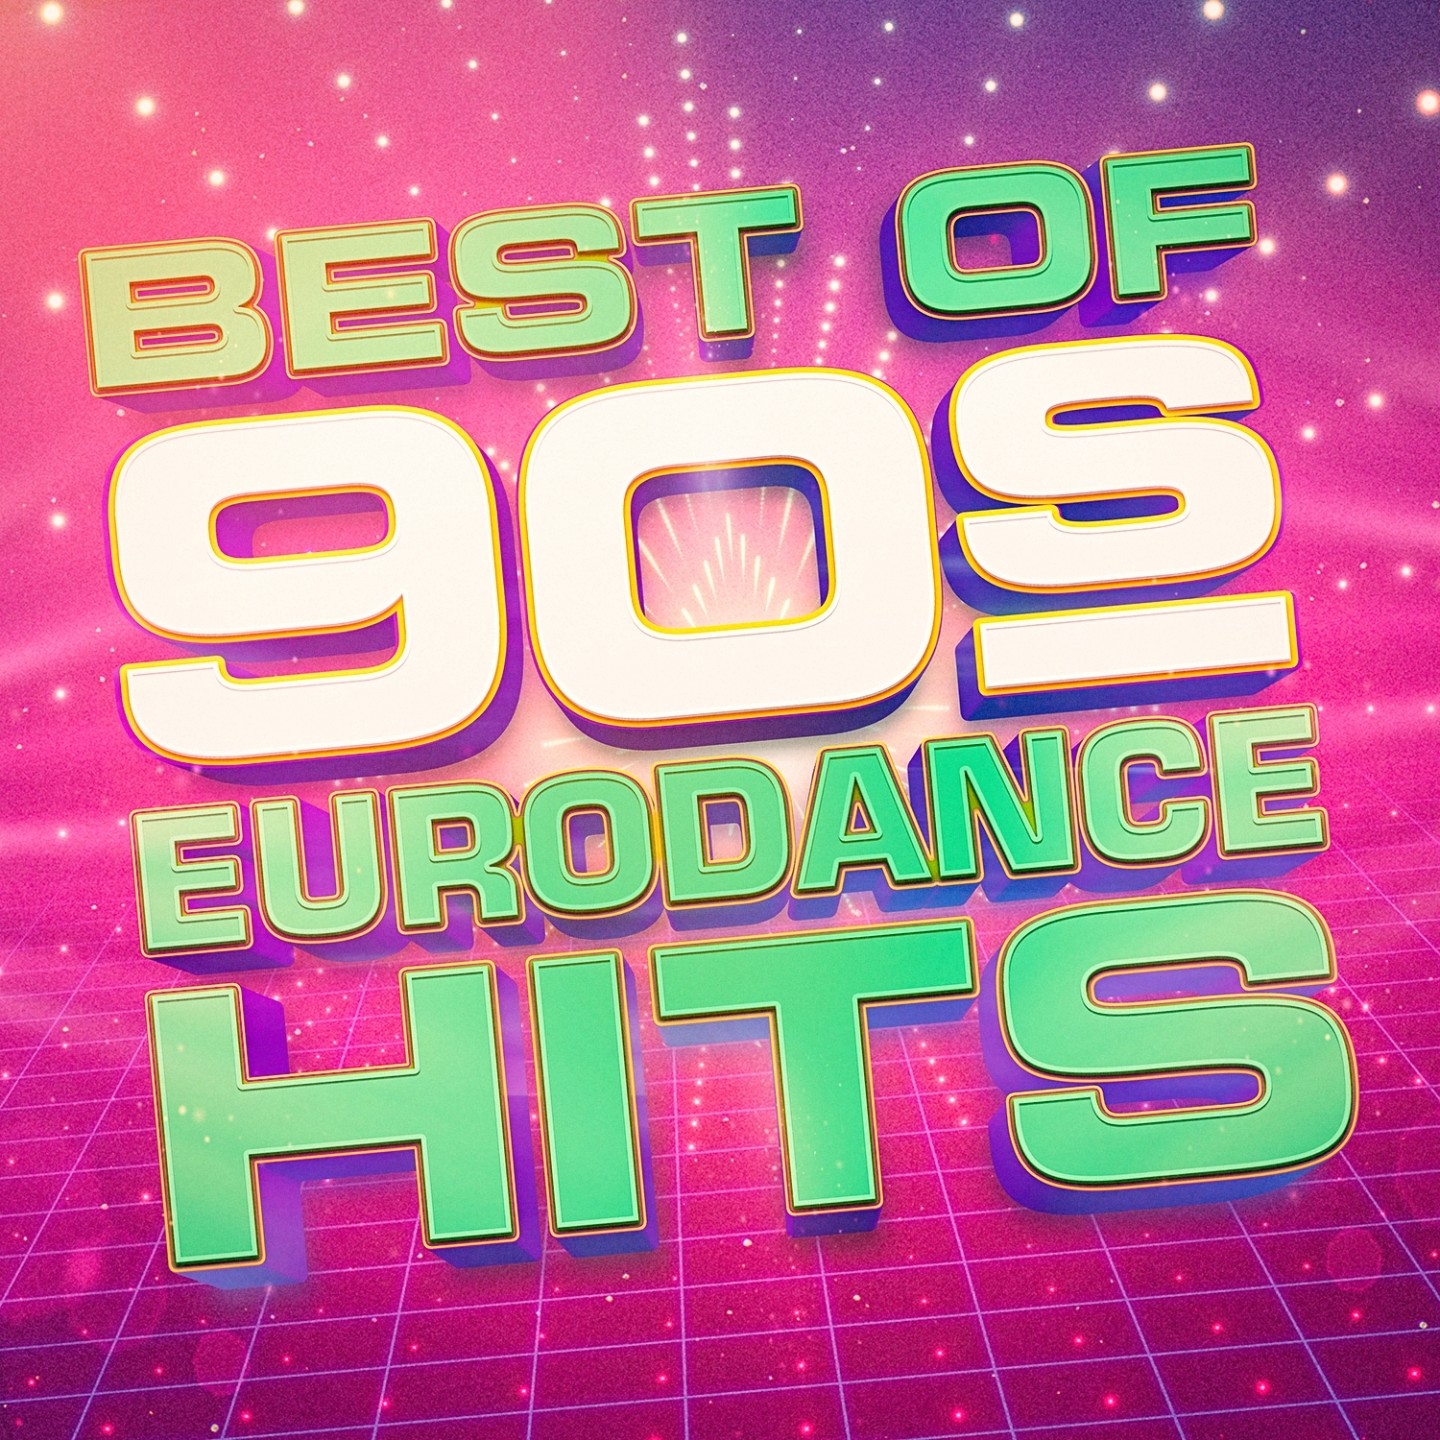 Top eurodance music. Евродэнс 90. Eurodance обложка. Eurodance 90s. Обложки евродэнс.